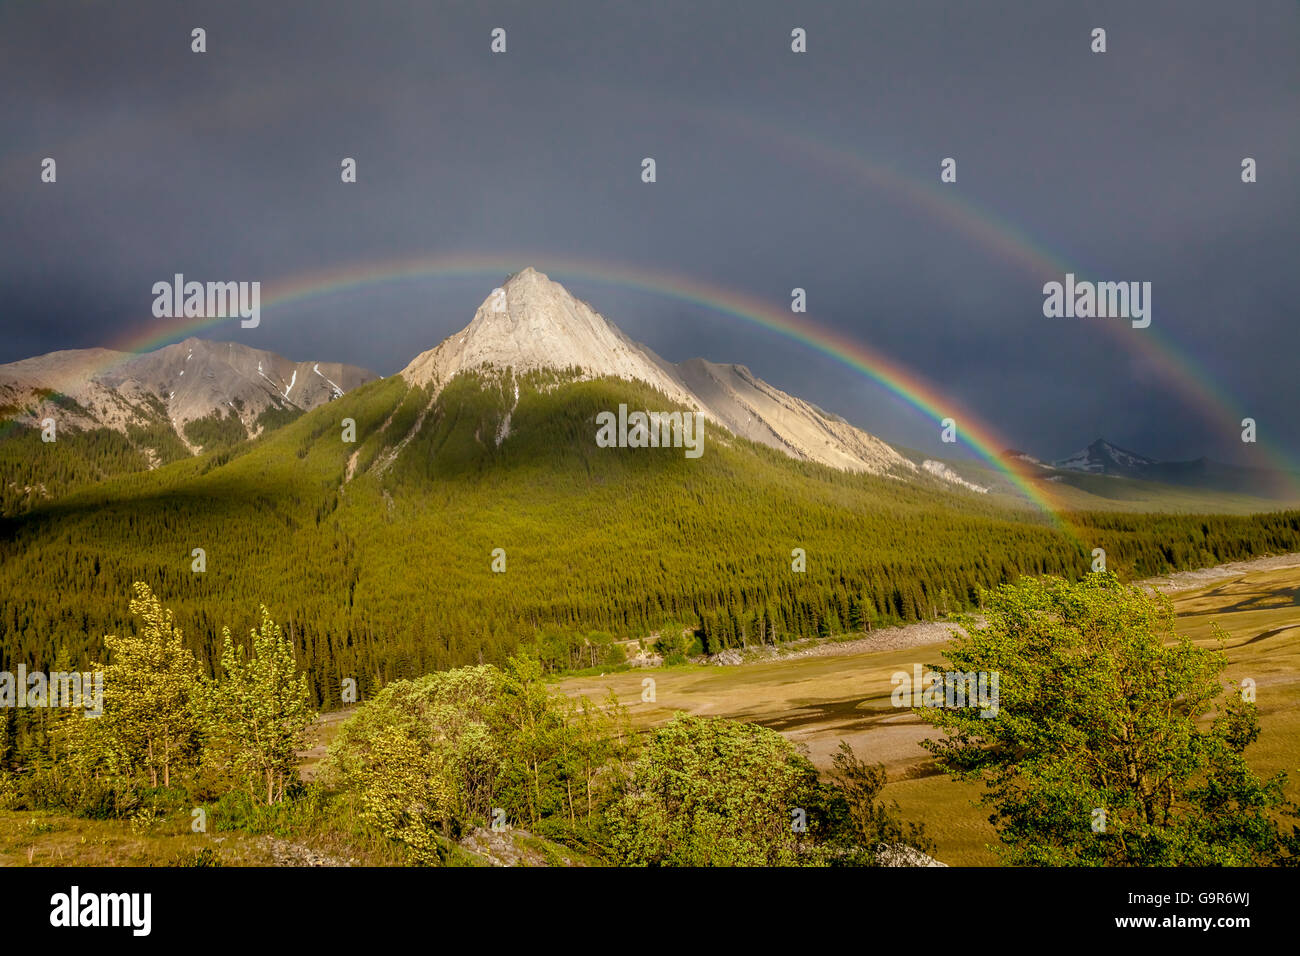 Doppelter Regenbogen über dem Gipfel in den Rocky Mountains, kanadischen Rocky Mountains, Kanada, Nordamerika Stockfoto